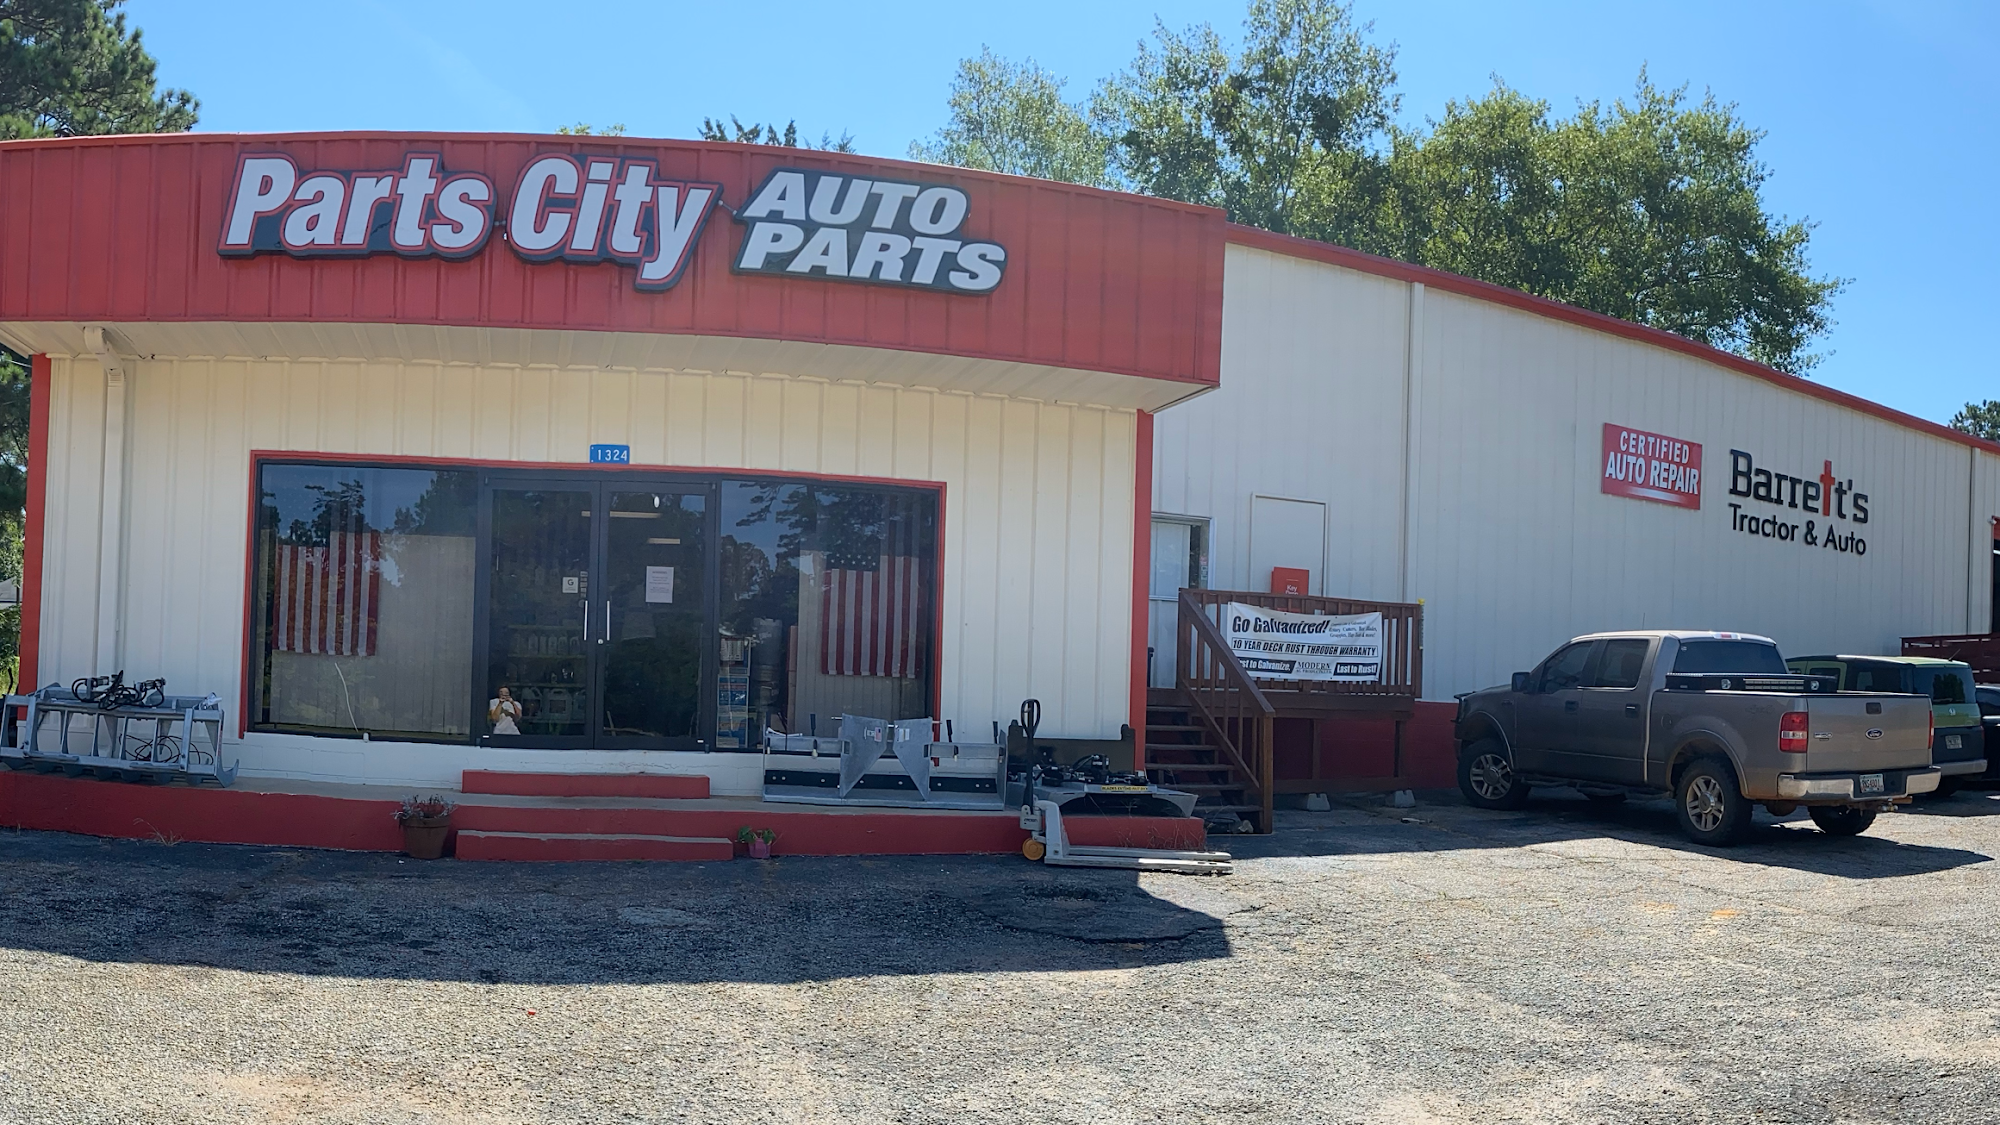 Barretts Tractor and Auto -Parts City Auto Parts